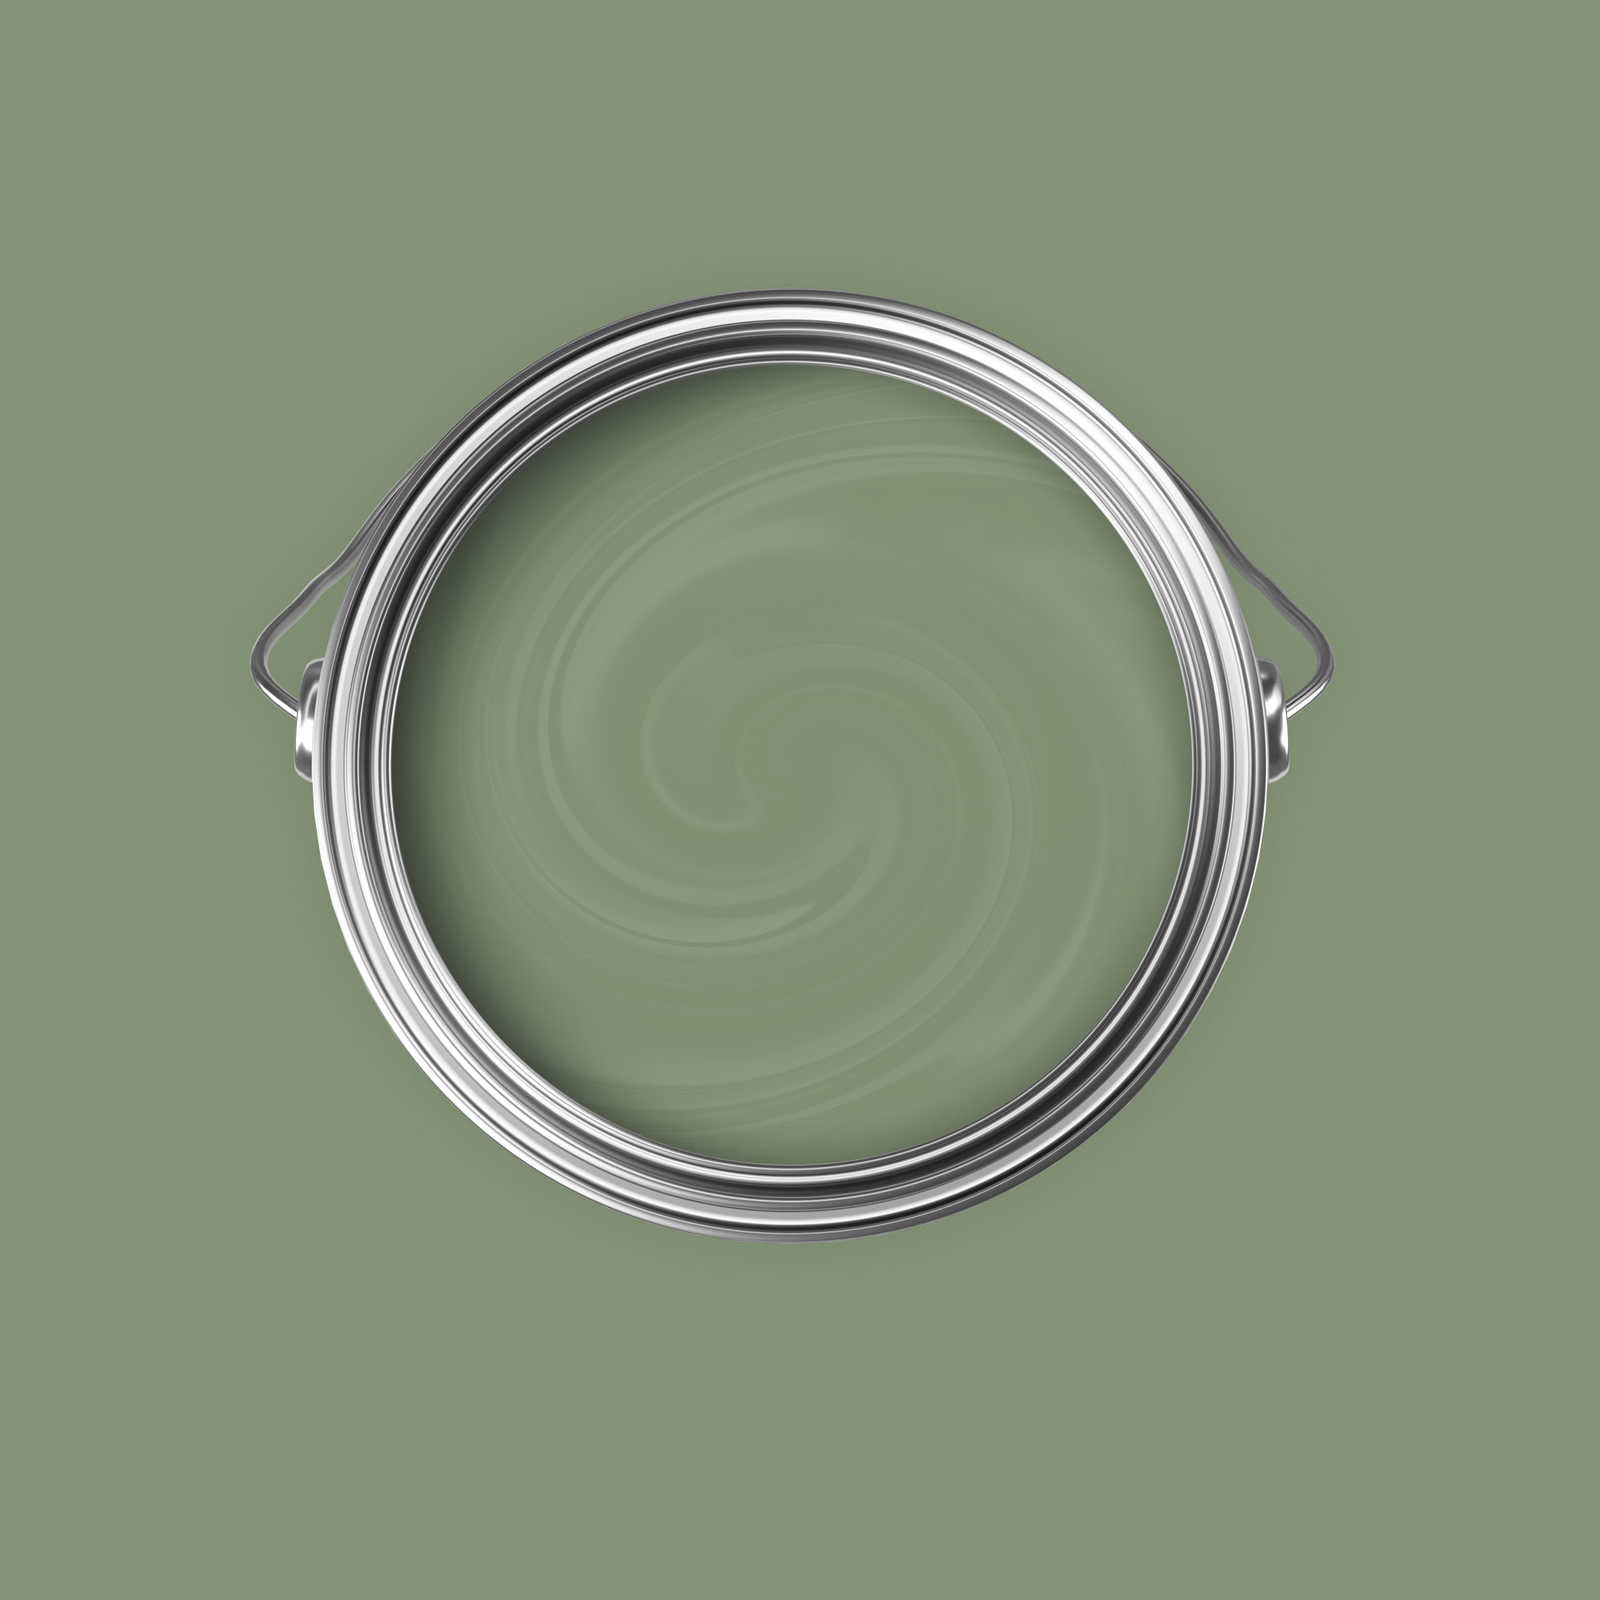             Premium Muurverf Naturel Olijfgroen »Gorgeous Green« NW503 – 5 liter
        